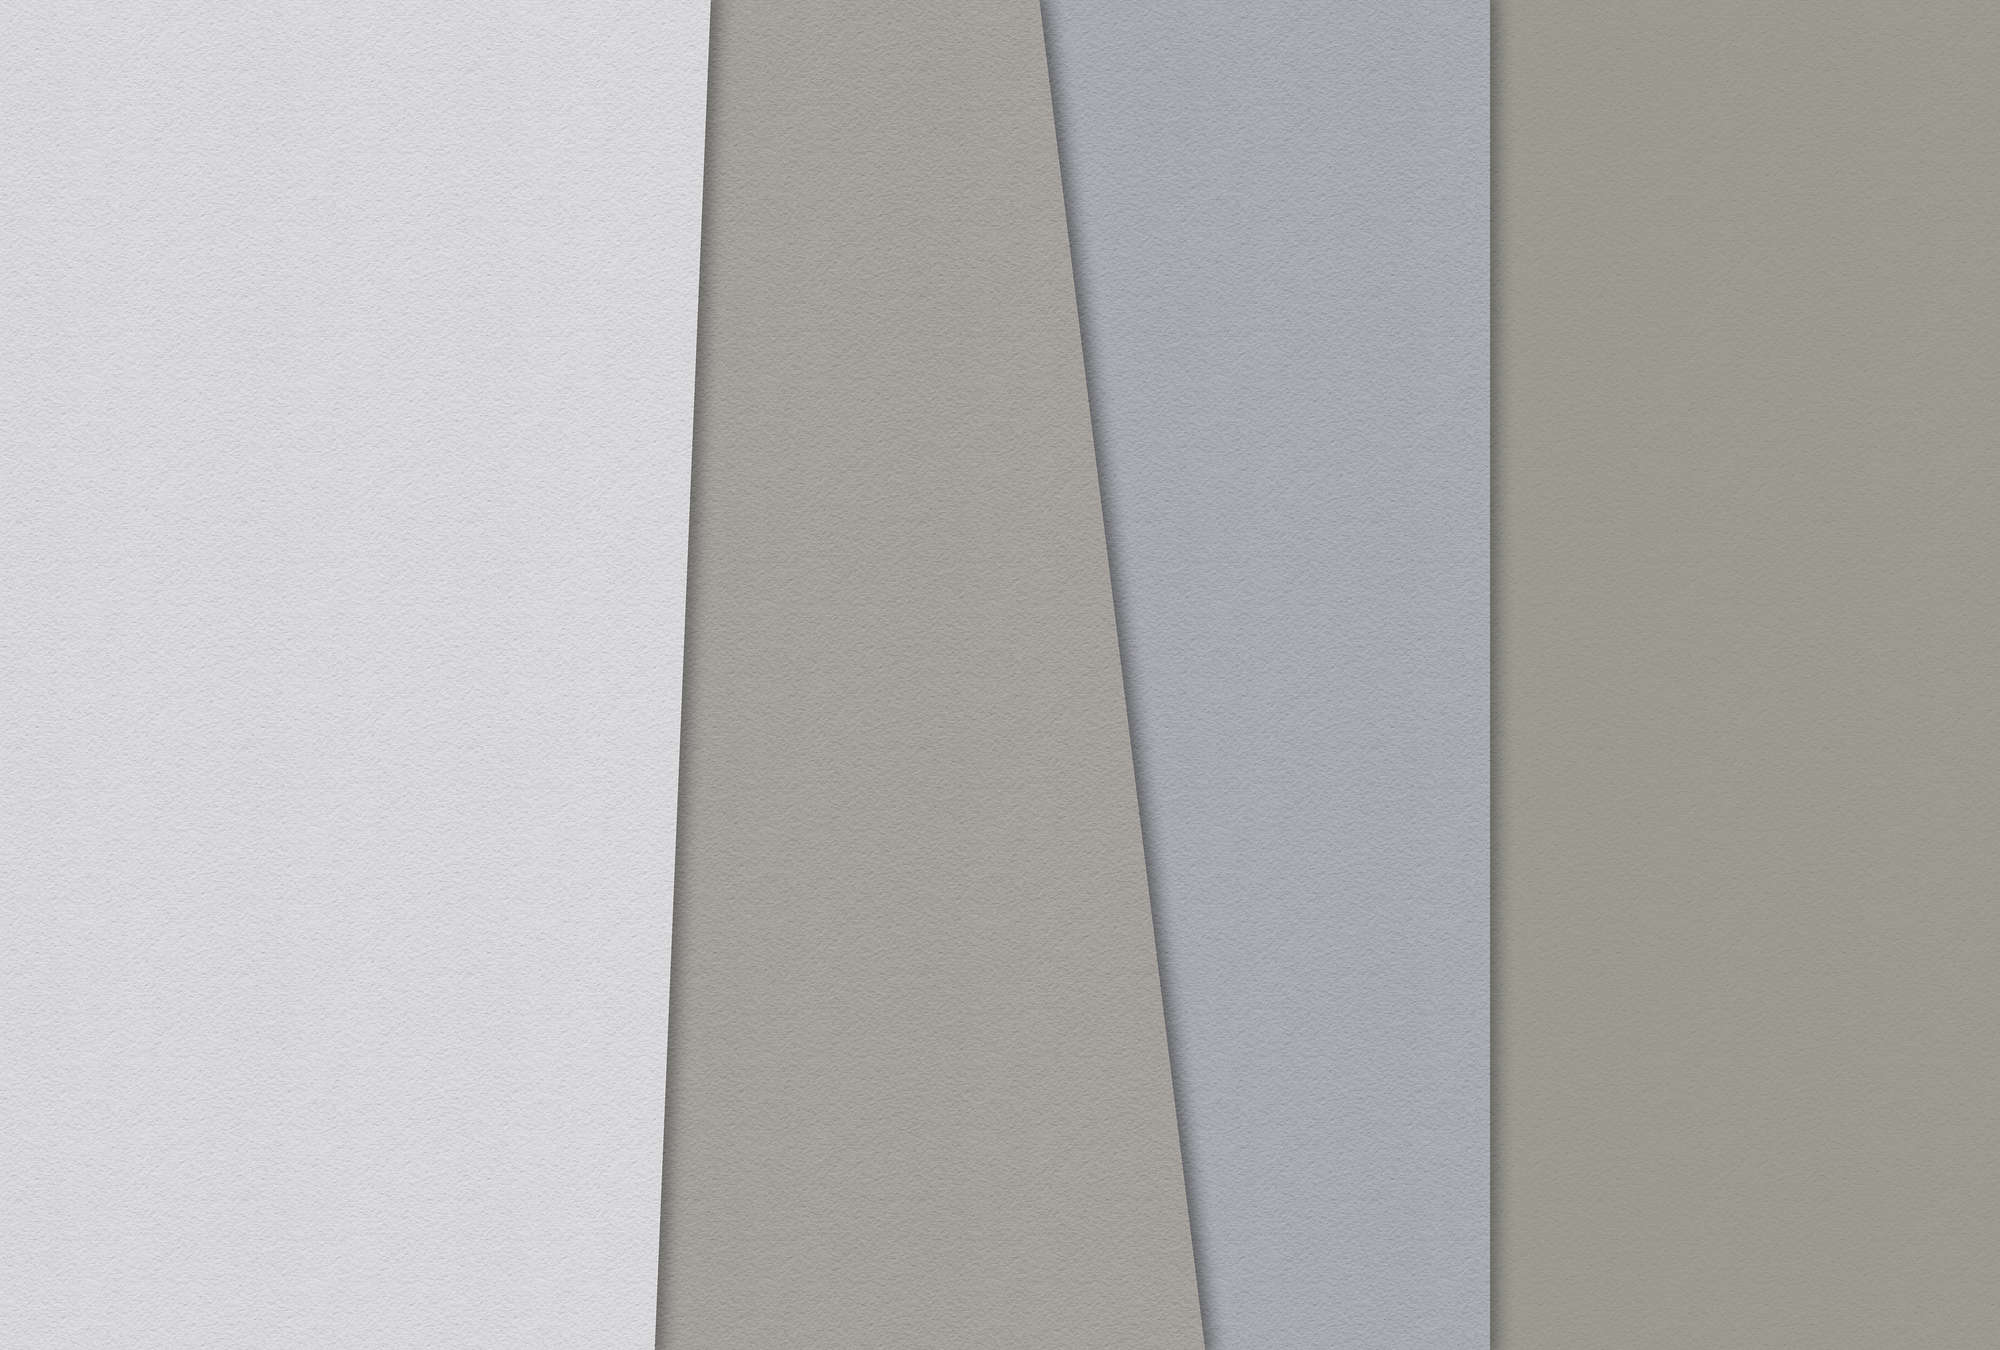             Gelaagd papier 4 - Bonte minimalistische muurschildering in handgemaakte papiertextuur - Blauw, Crème | Premium glad fleece
        